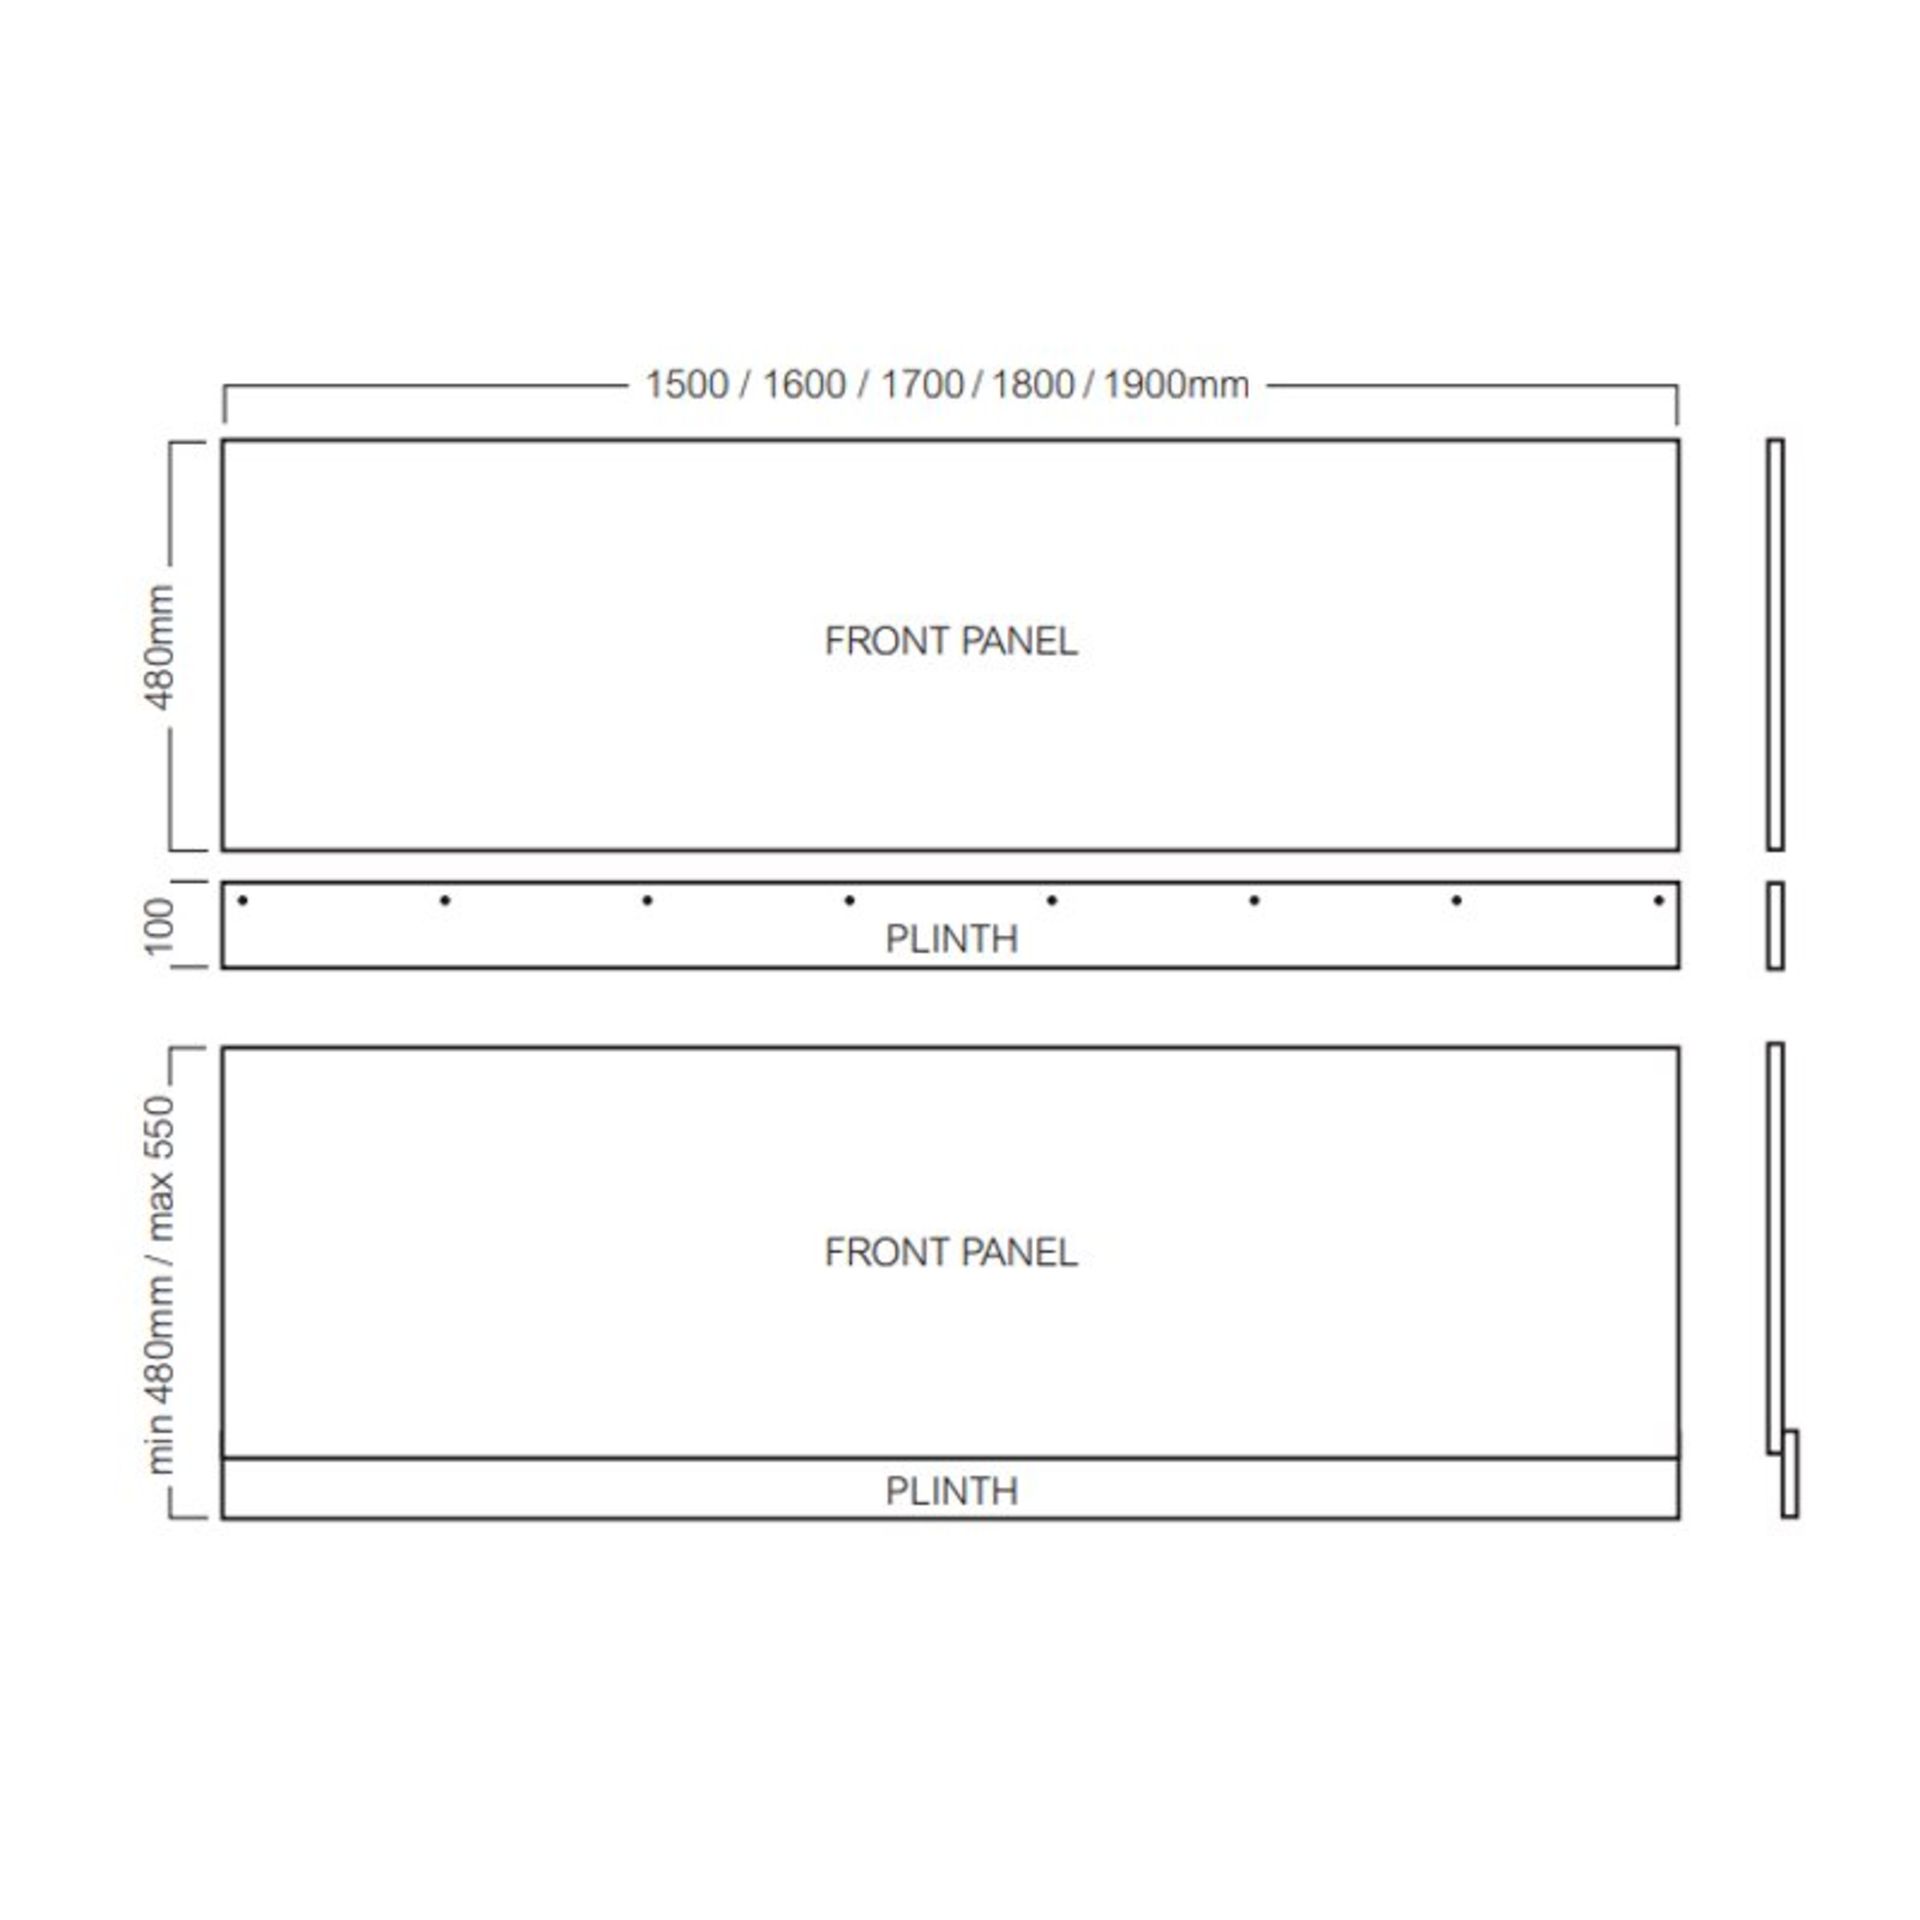 ZZ-ROB-237BPM1700 - Robert Lee Halite Bath Front Panel - 550mm x 1700mm - Gloss White. ... - Image 2 of 2